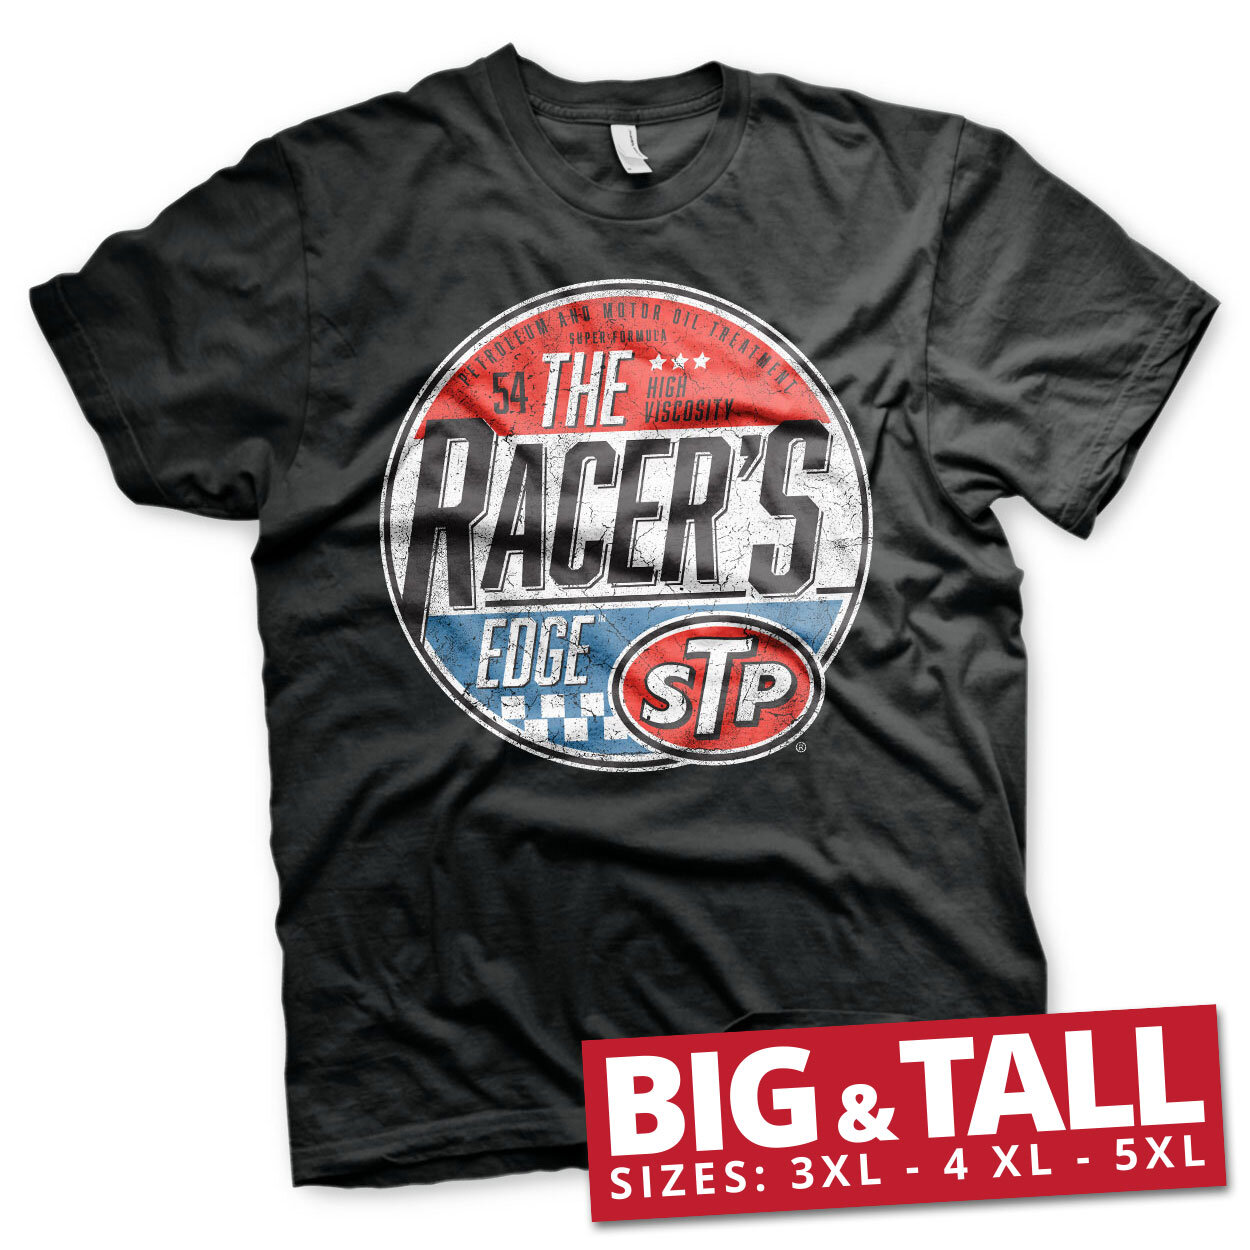 STP - The Racer's Edge Big & Tall T-Shirt